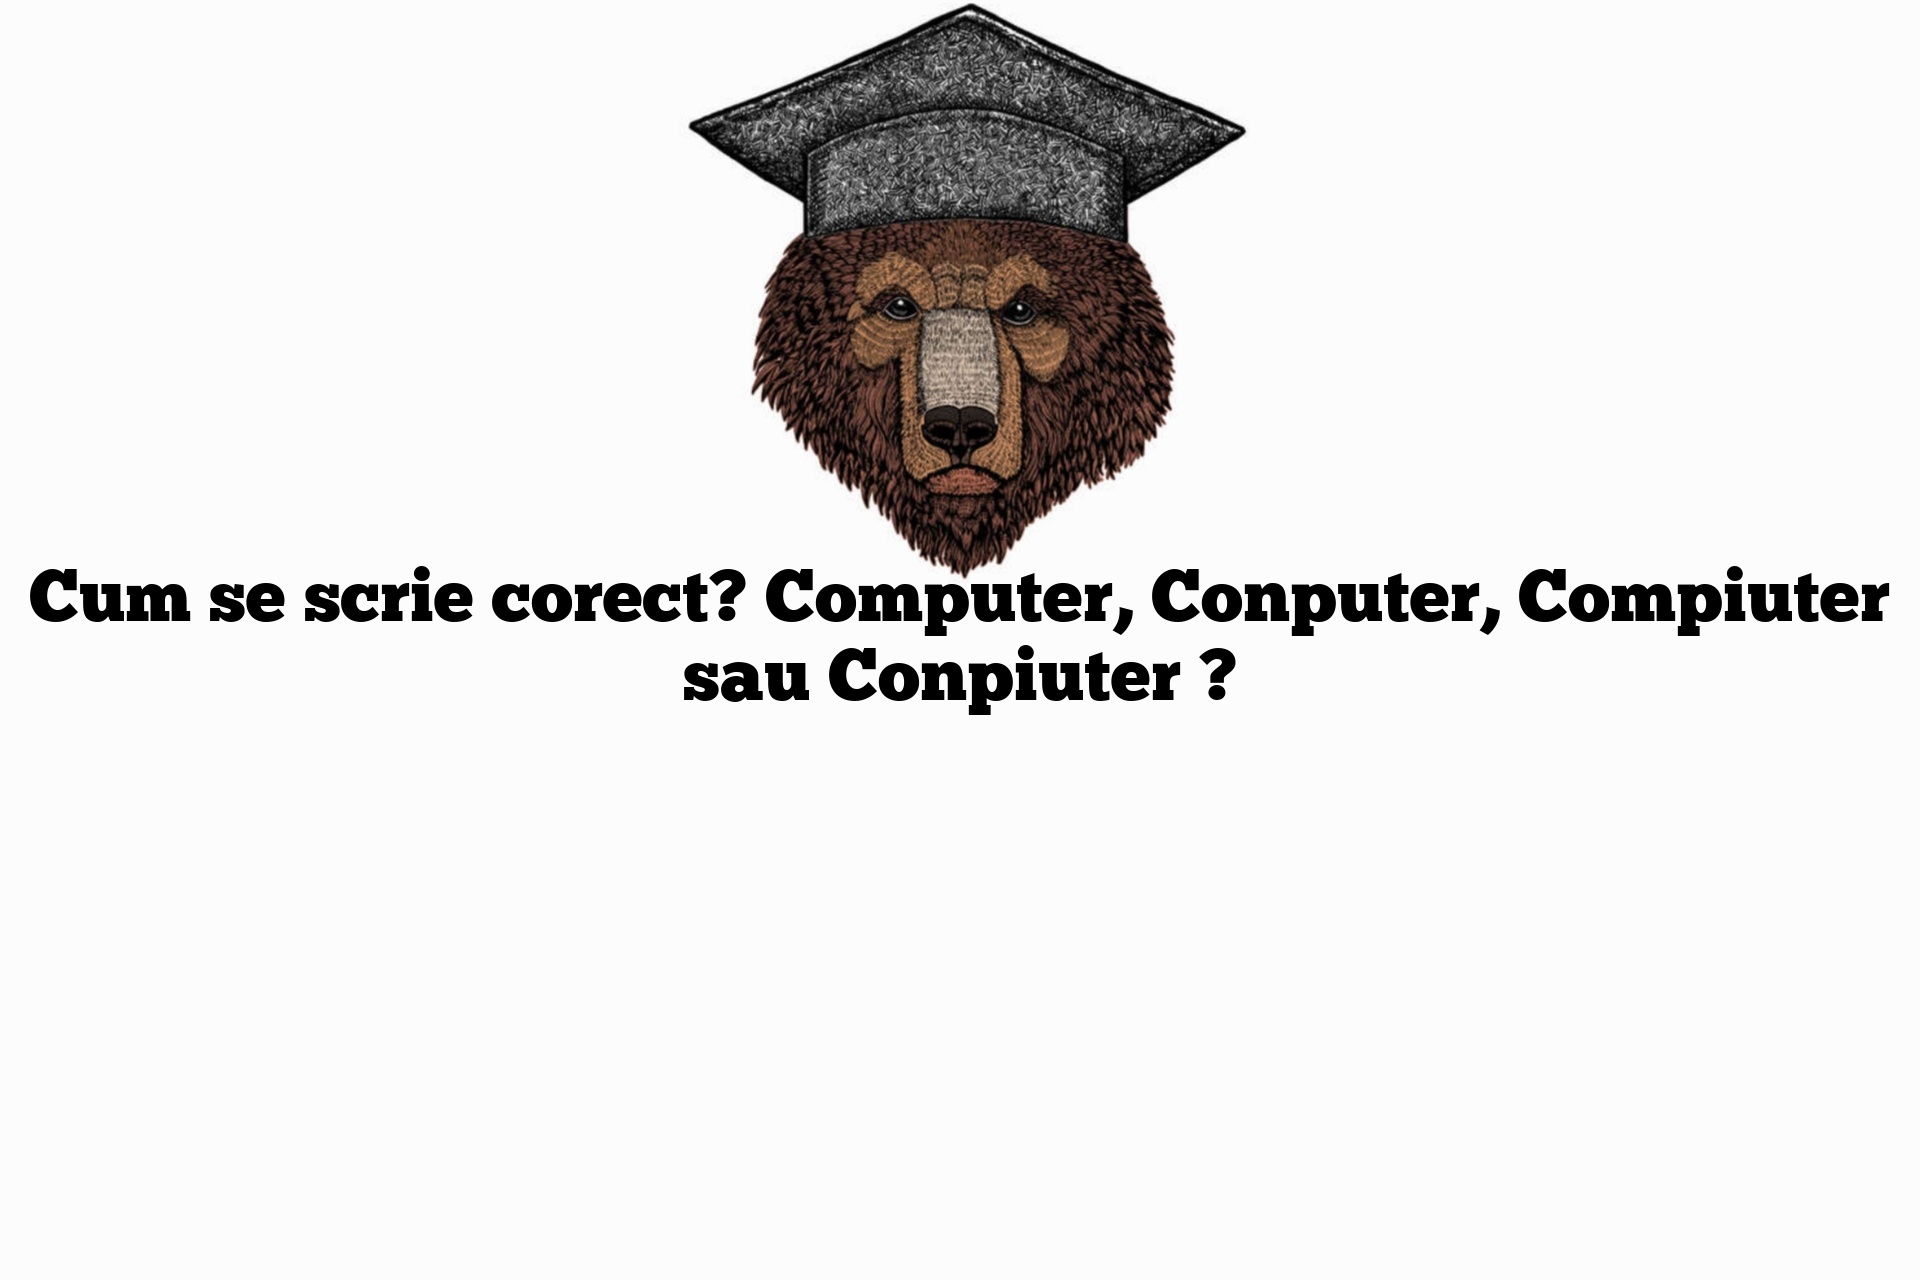 Cum se scrie corect? Computer, Conputer, Compiuter sau Conpiuter ?